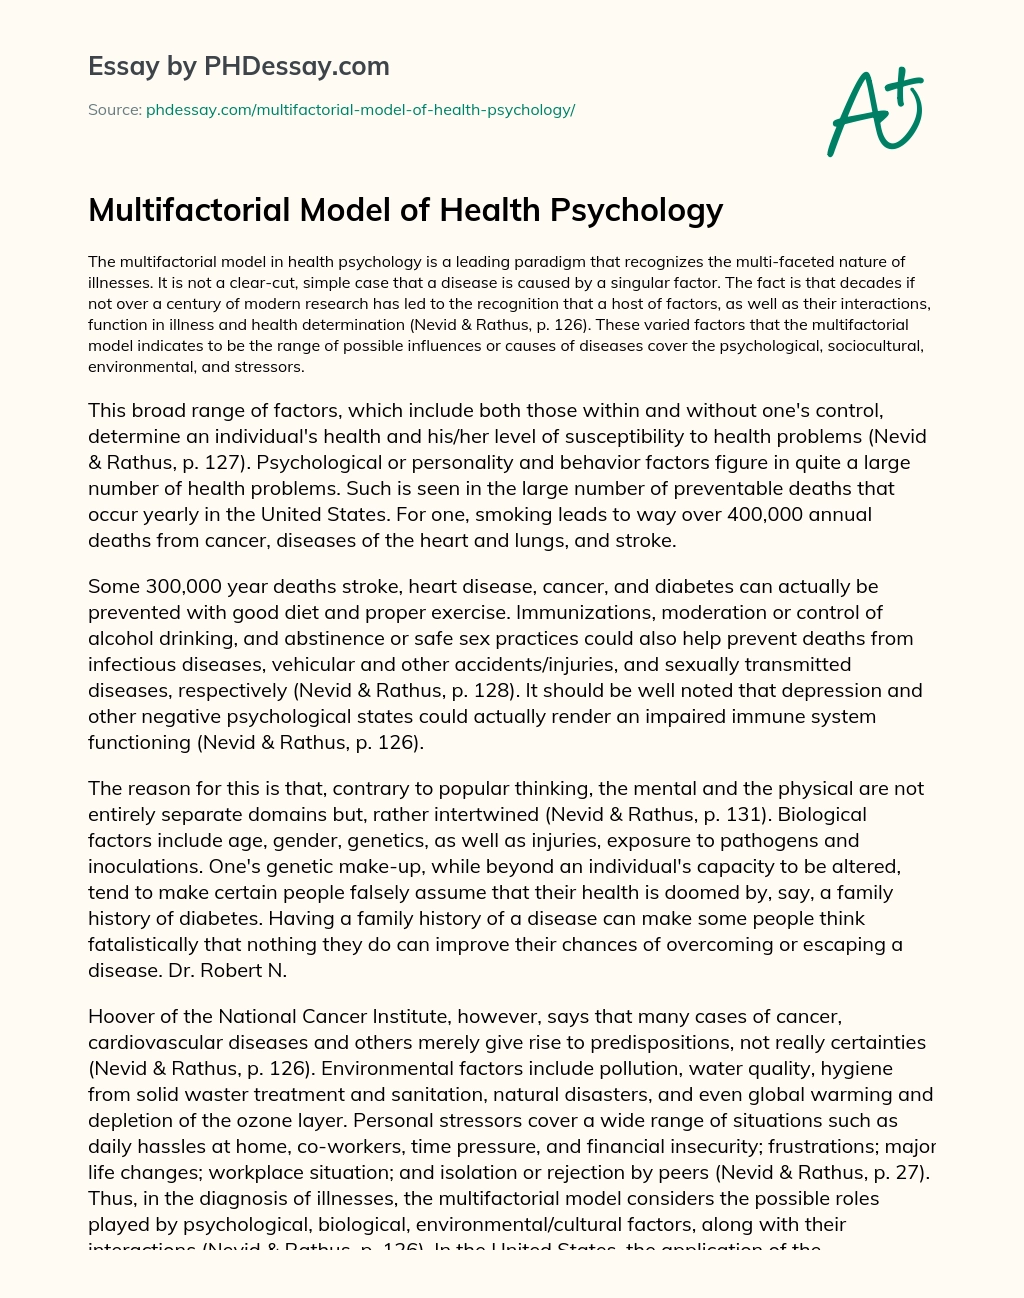 Multifactorial Model of Health Psychology essay